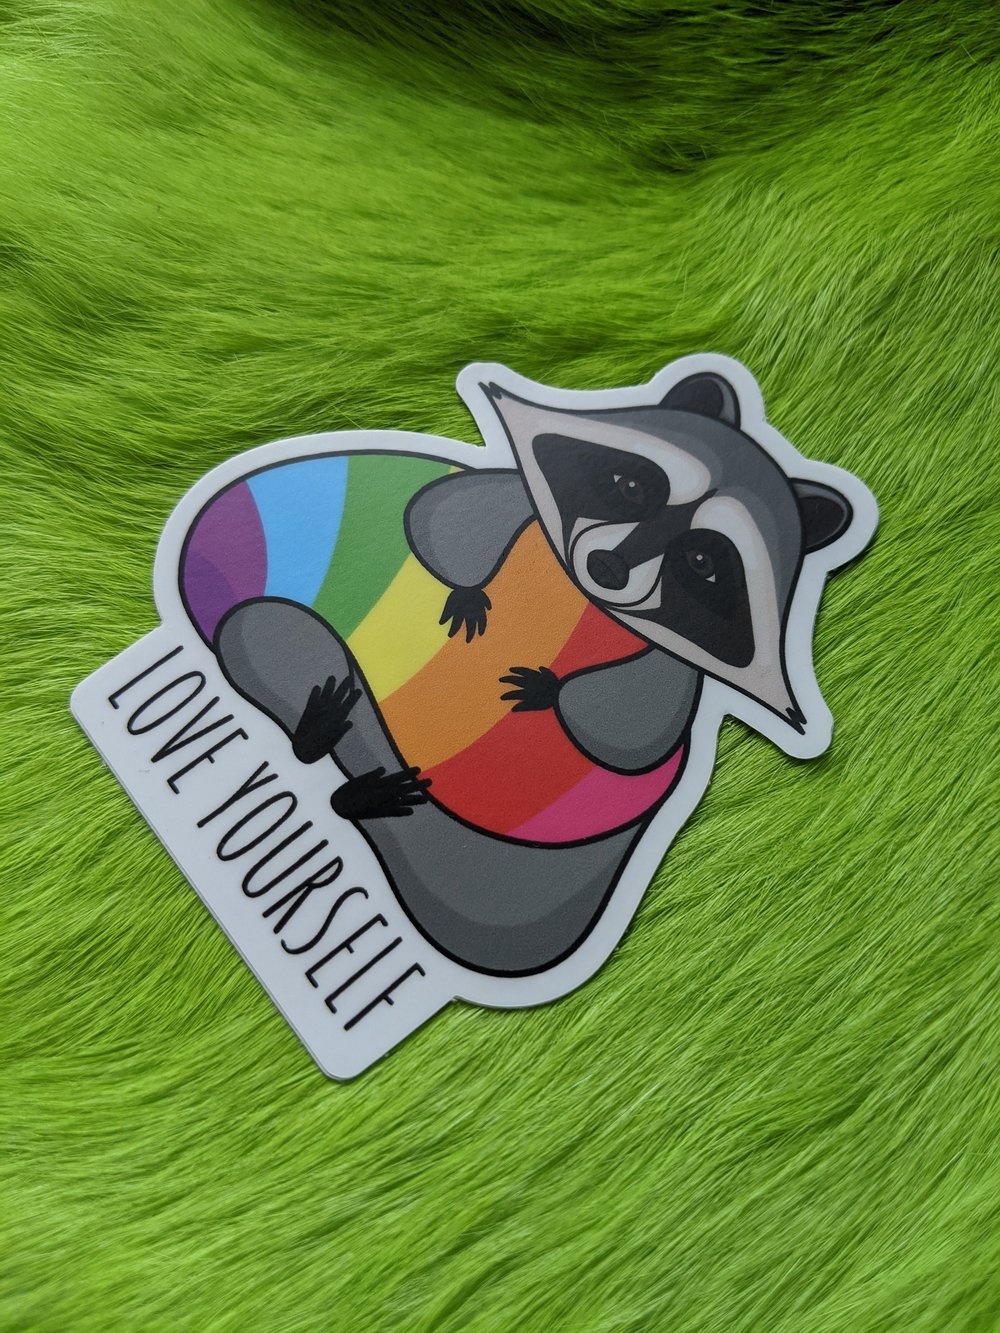 Image of Love Yourself Pride Raccoon Sticker